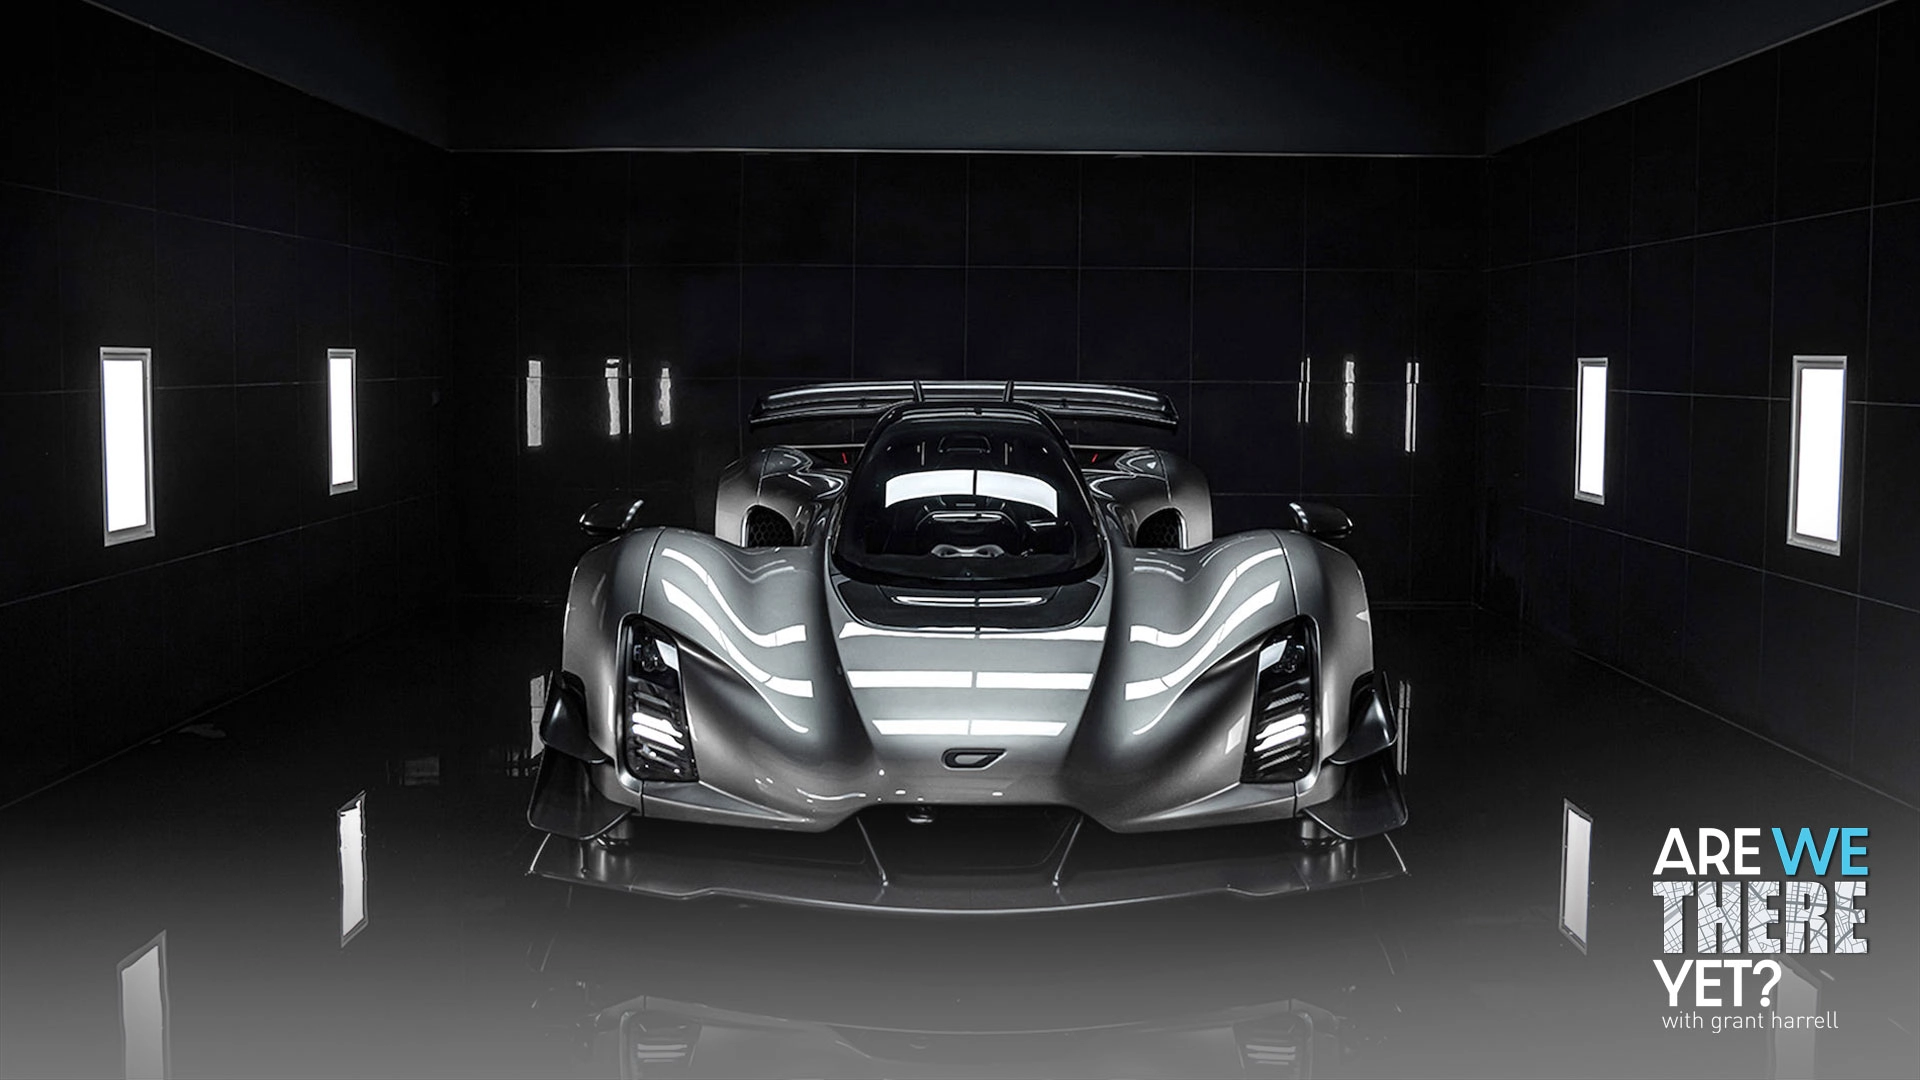 Czinger Vehicles & Divergent 3D: The Next Generation Of Automotive Manufacturing